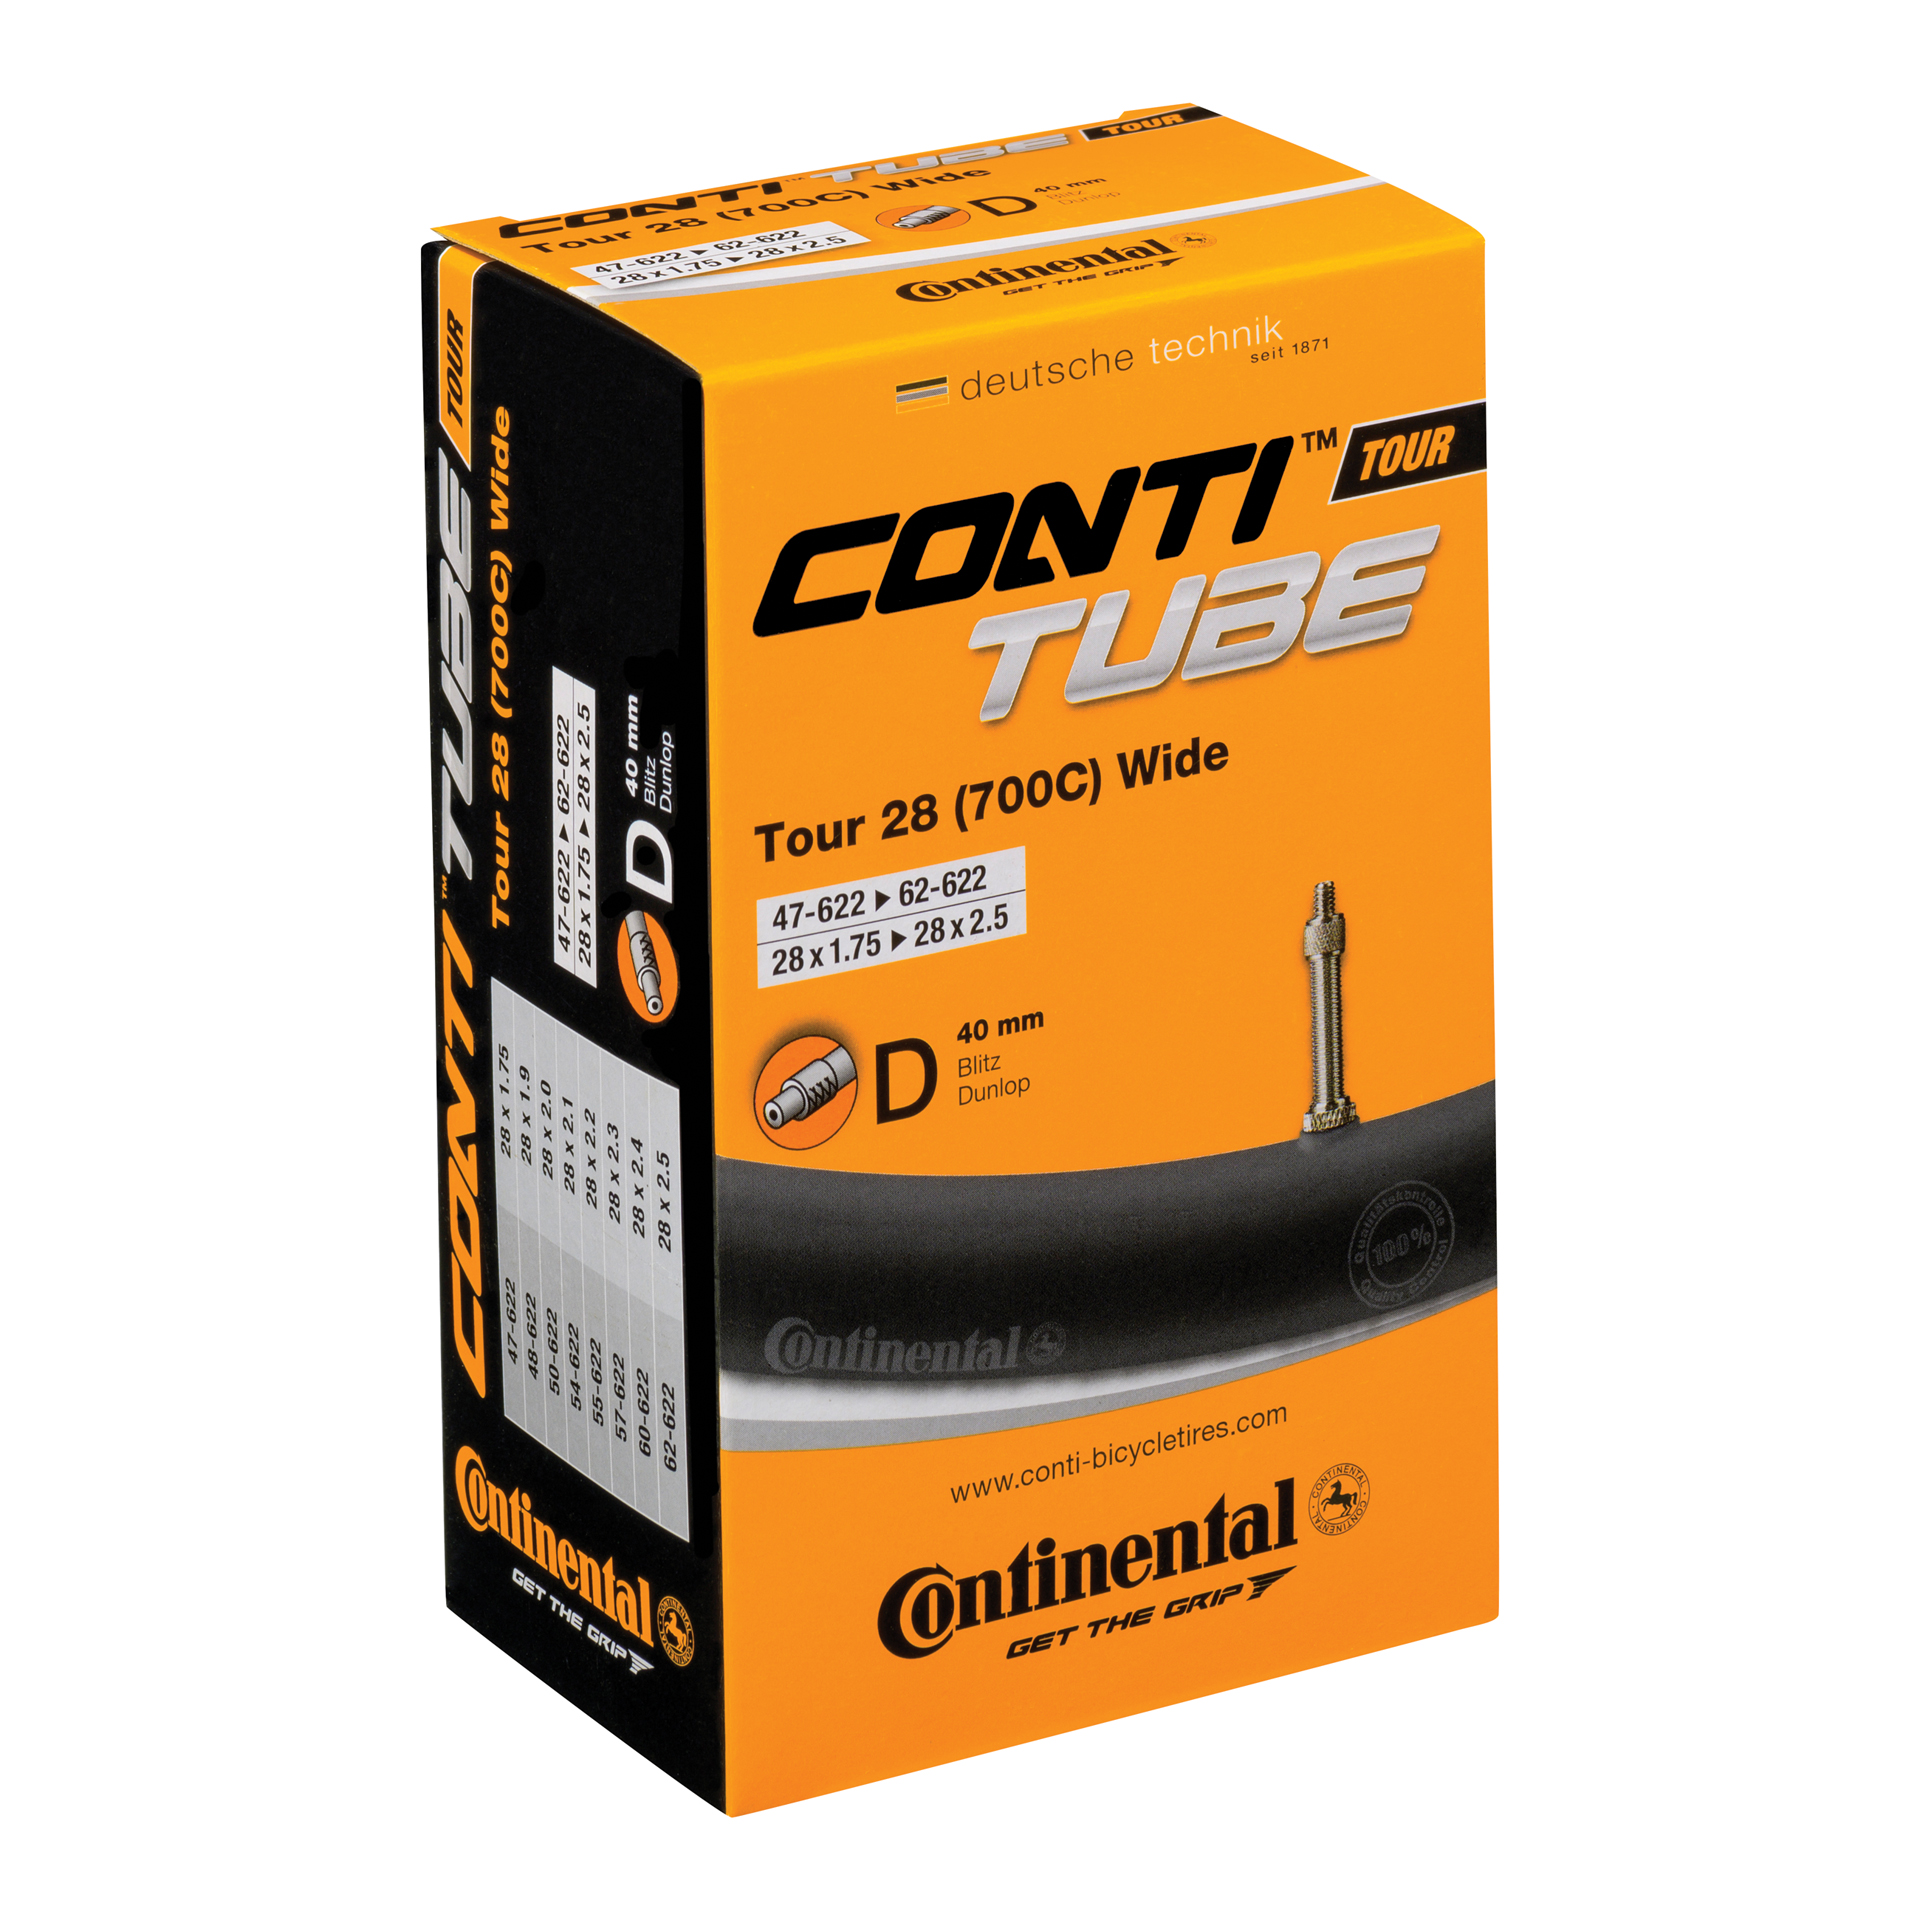 Continental Continental Binnenband Tour 28" Wide 40mm DV  5036708